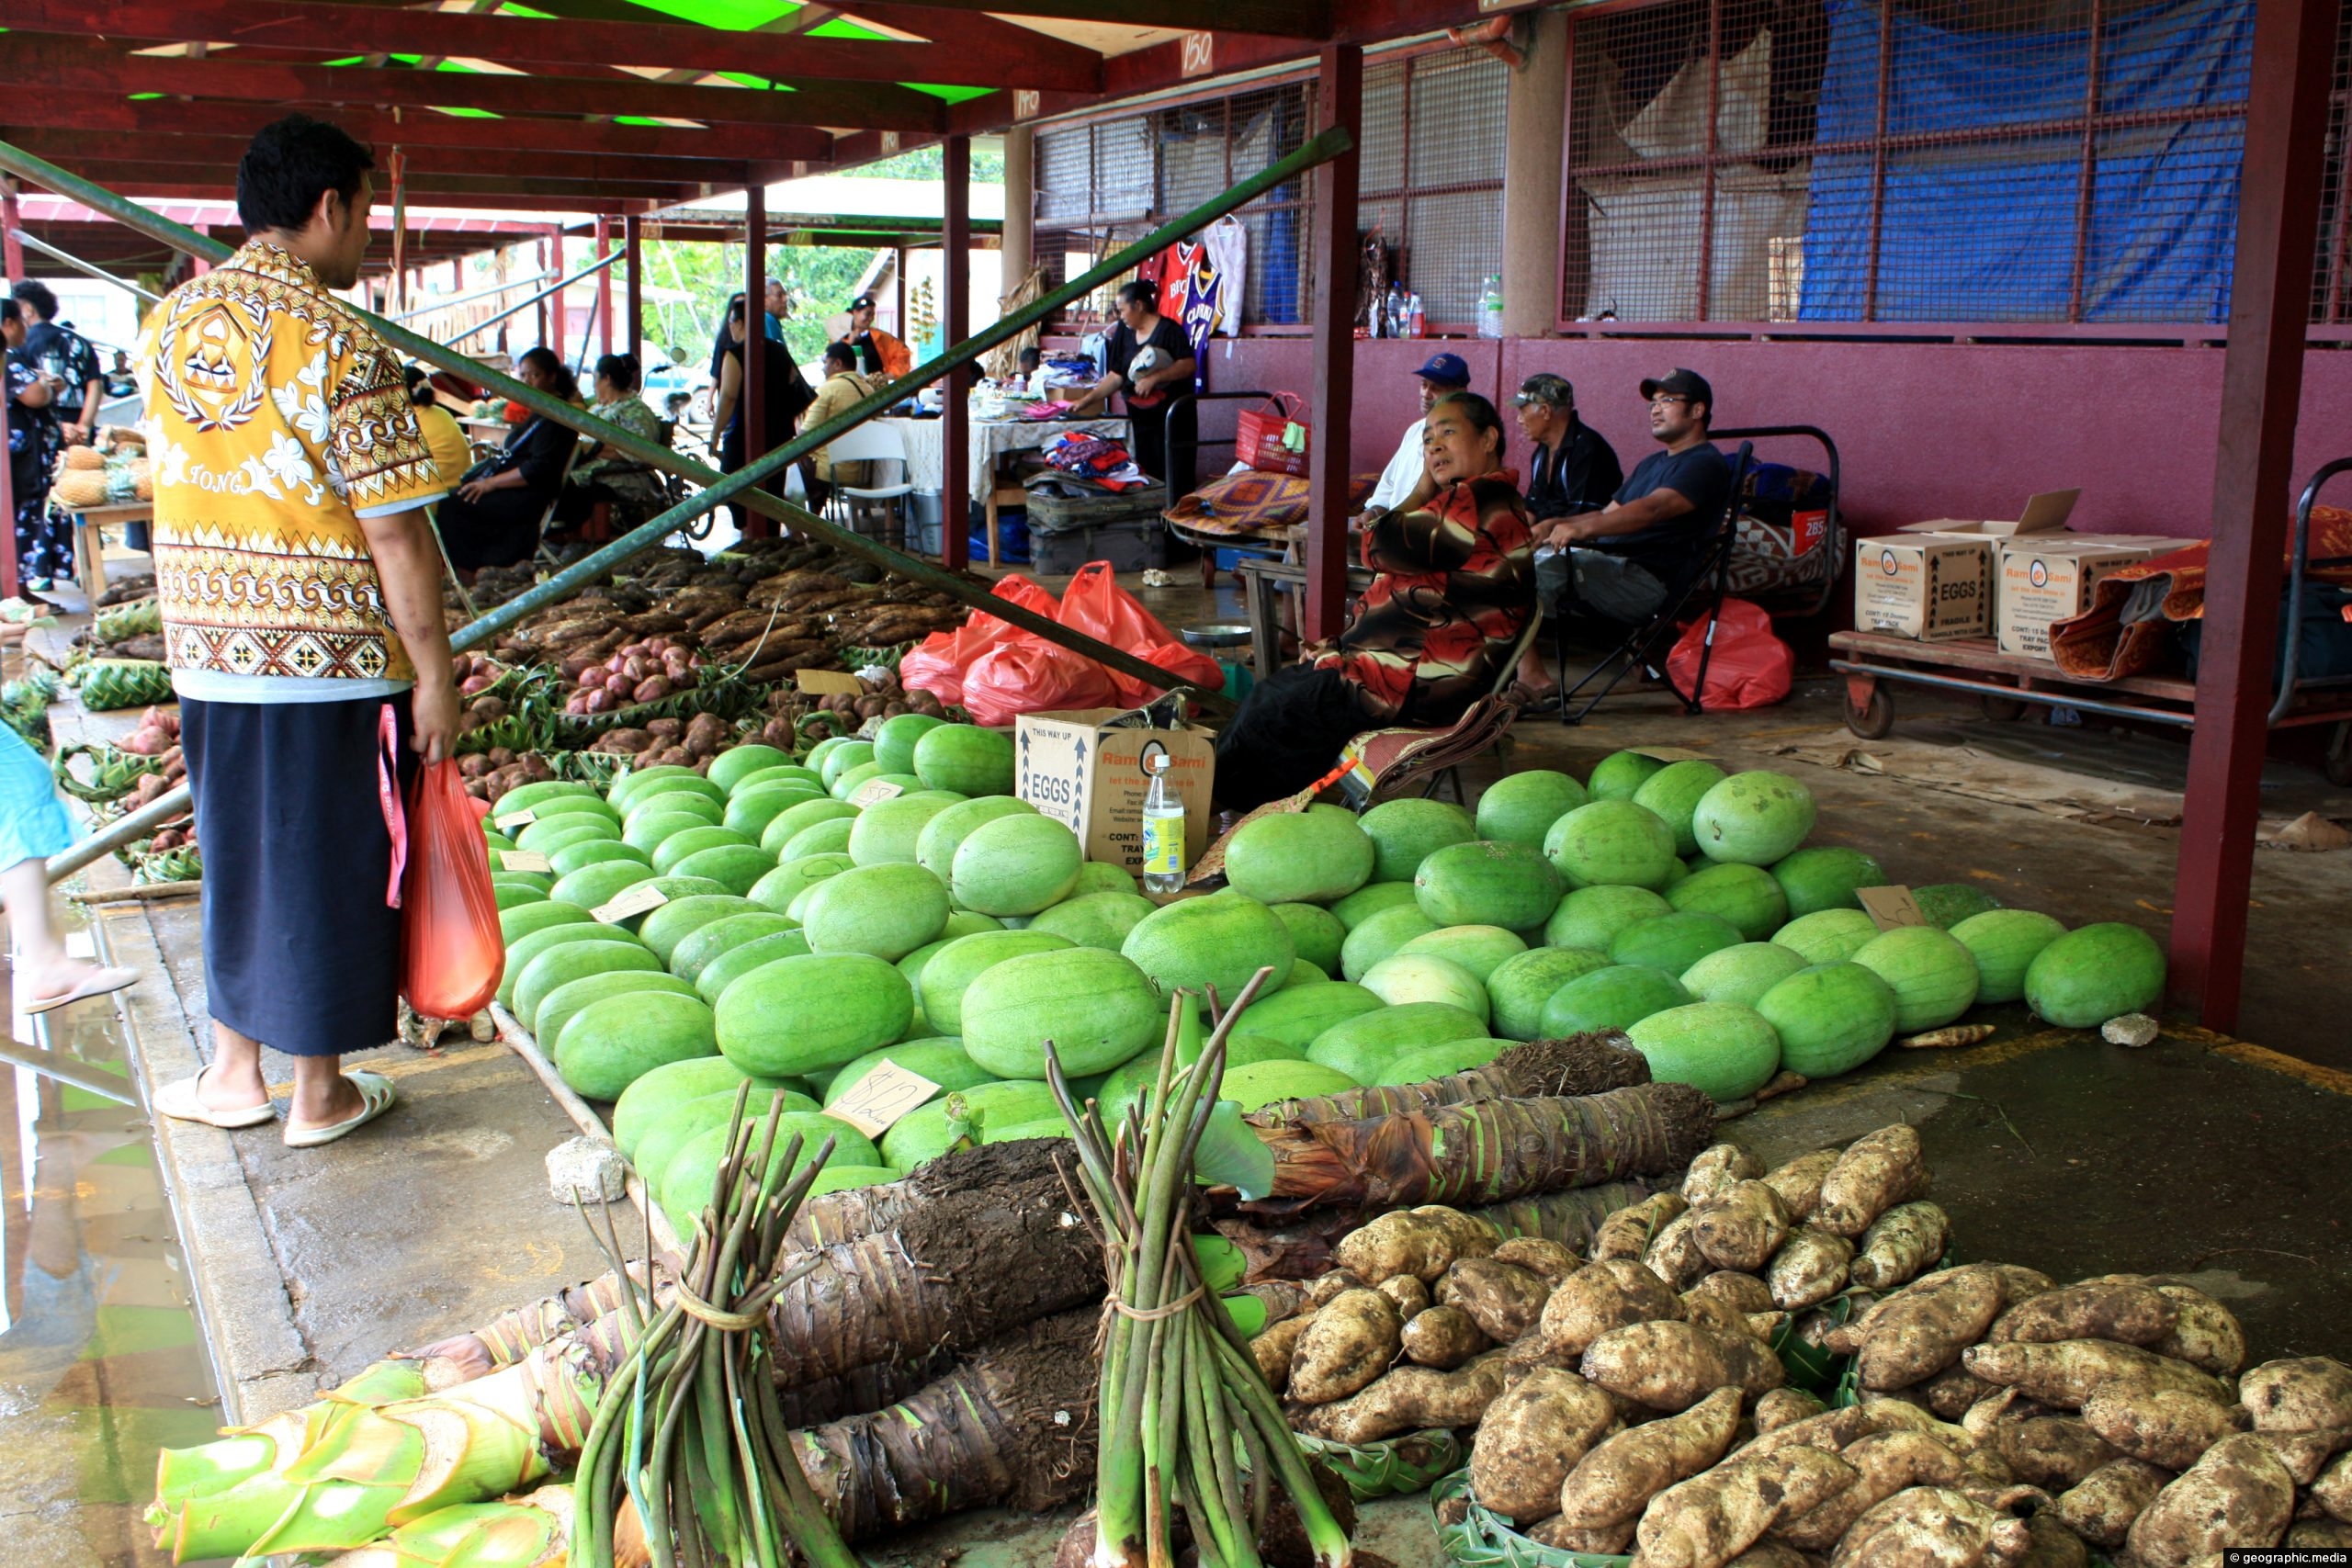 Talamahu Market in Nuku'alofa Tonga